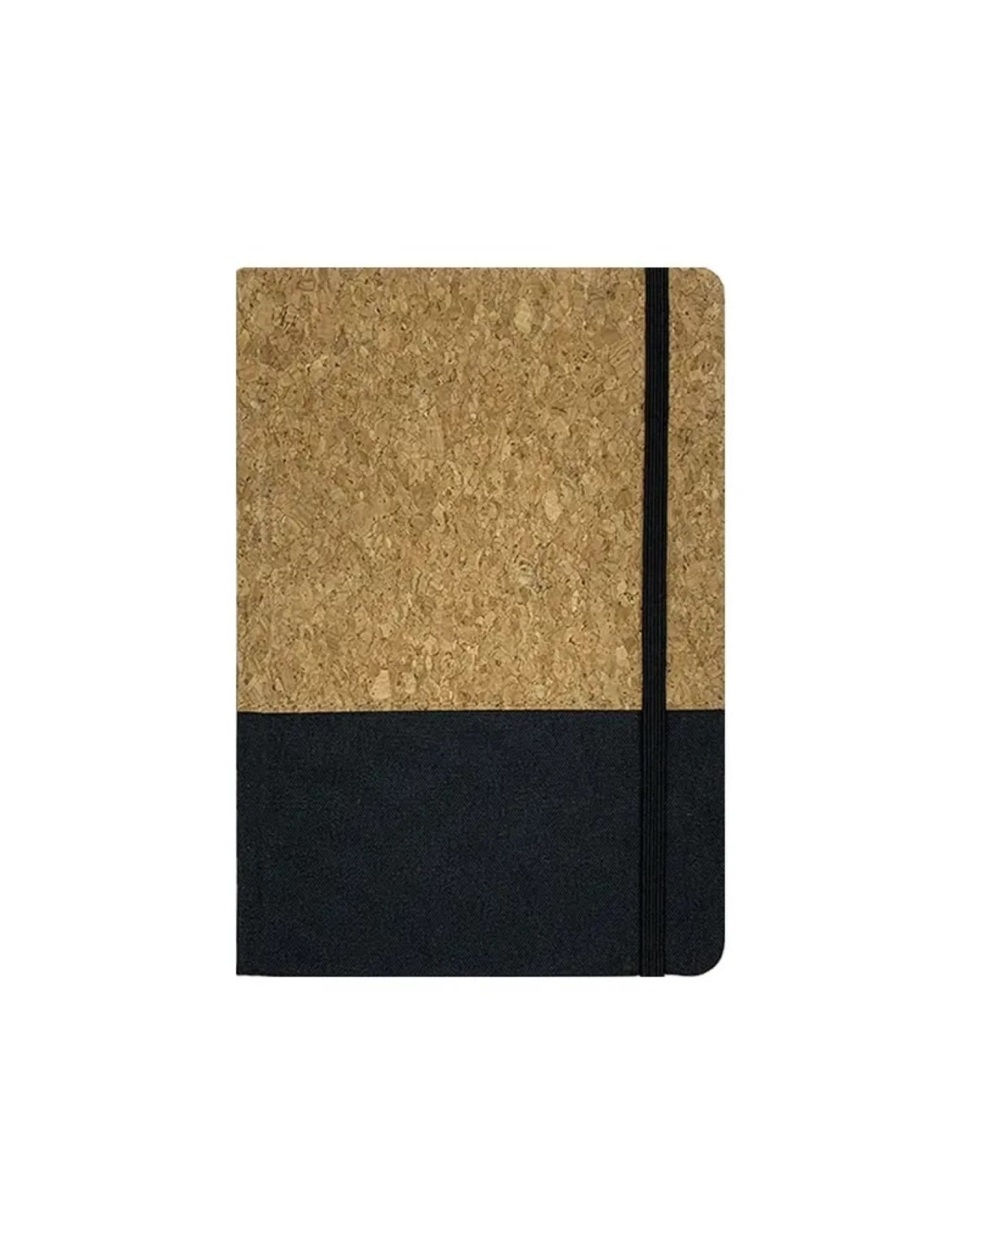 corkfabricnotebook hardcover cover1 1